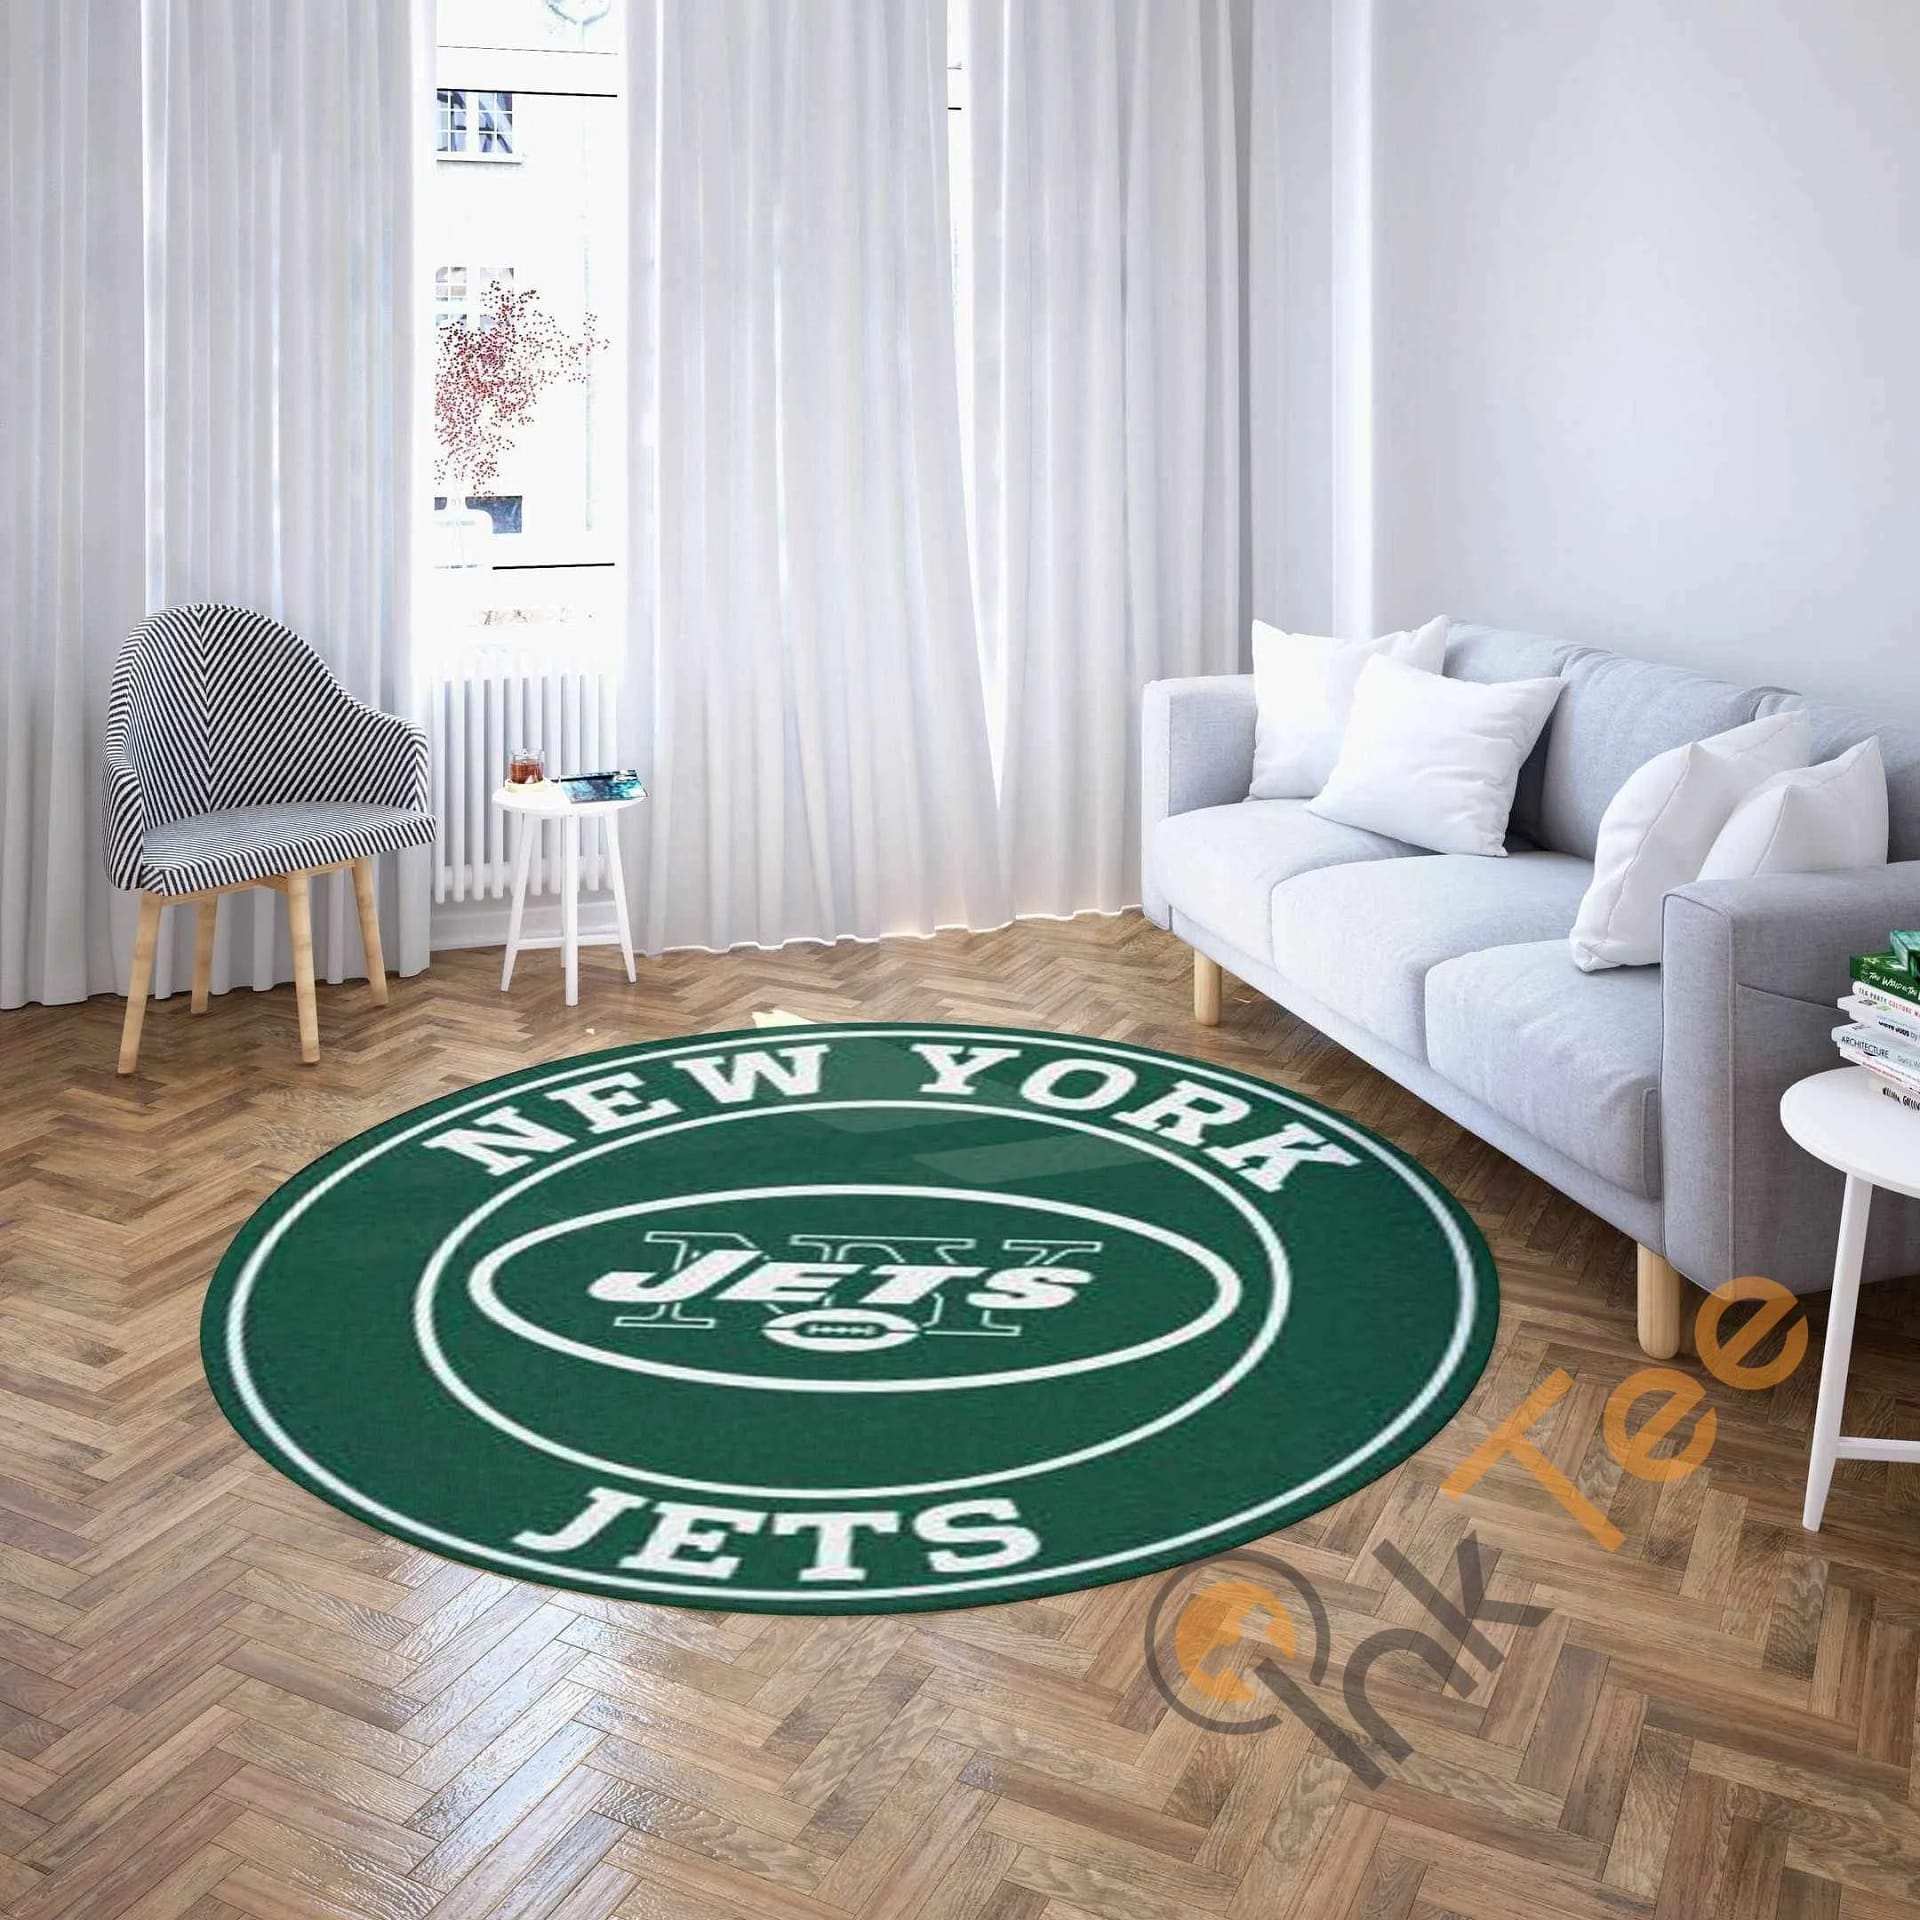 New York Jets Round Carpet Nfl Football Amazon Best Seller Sku 2690 Rug